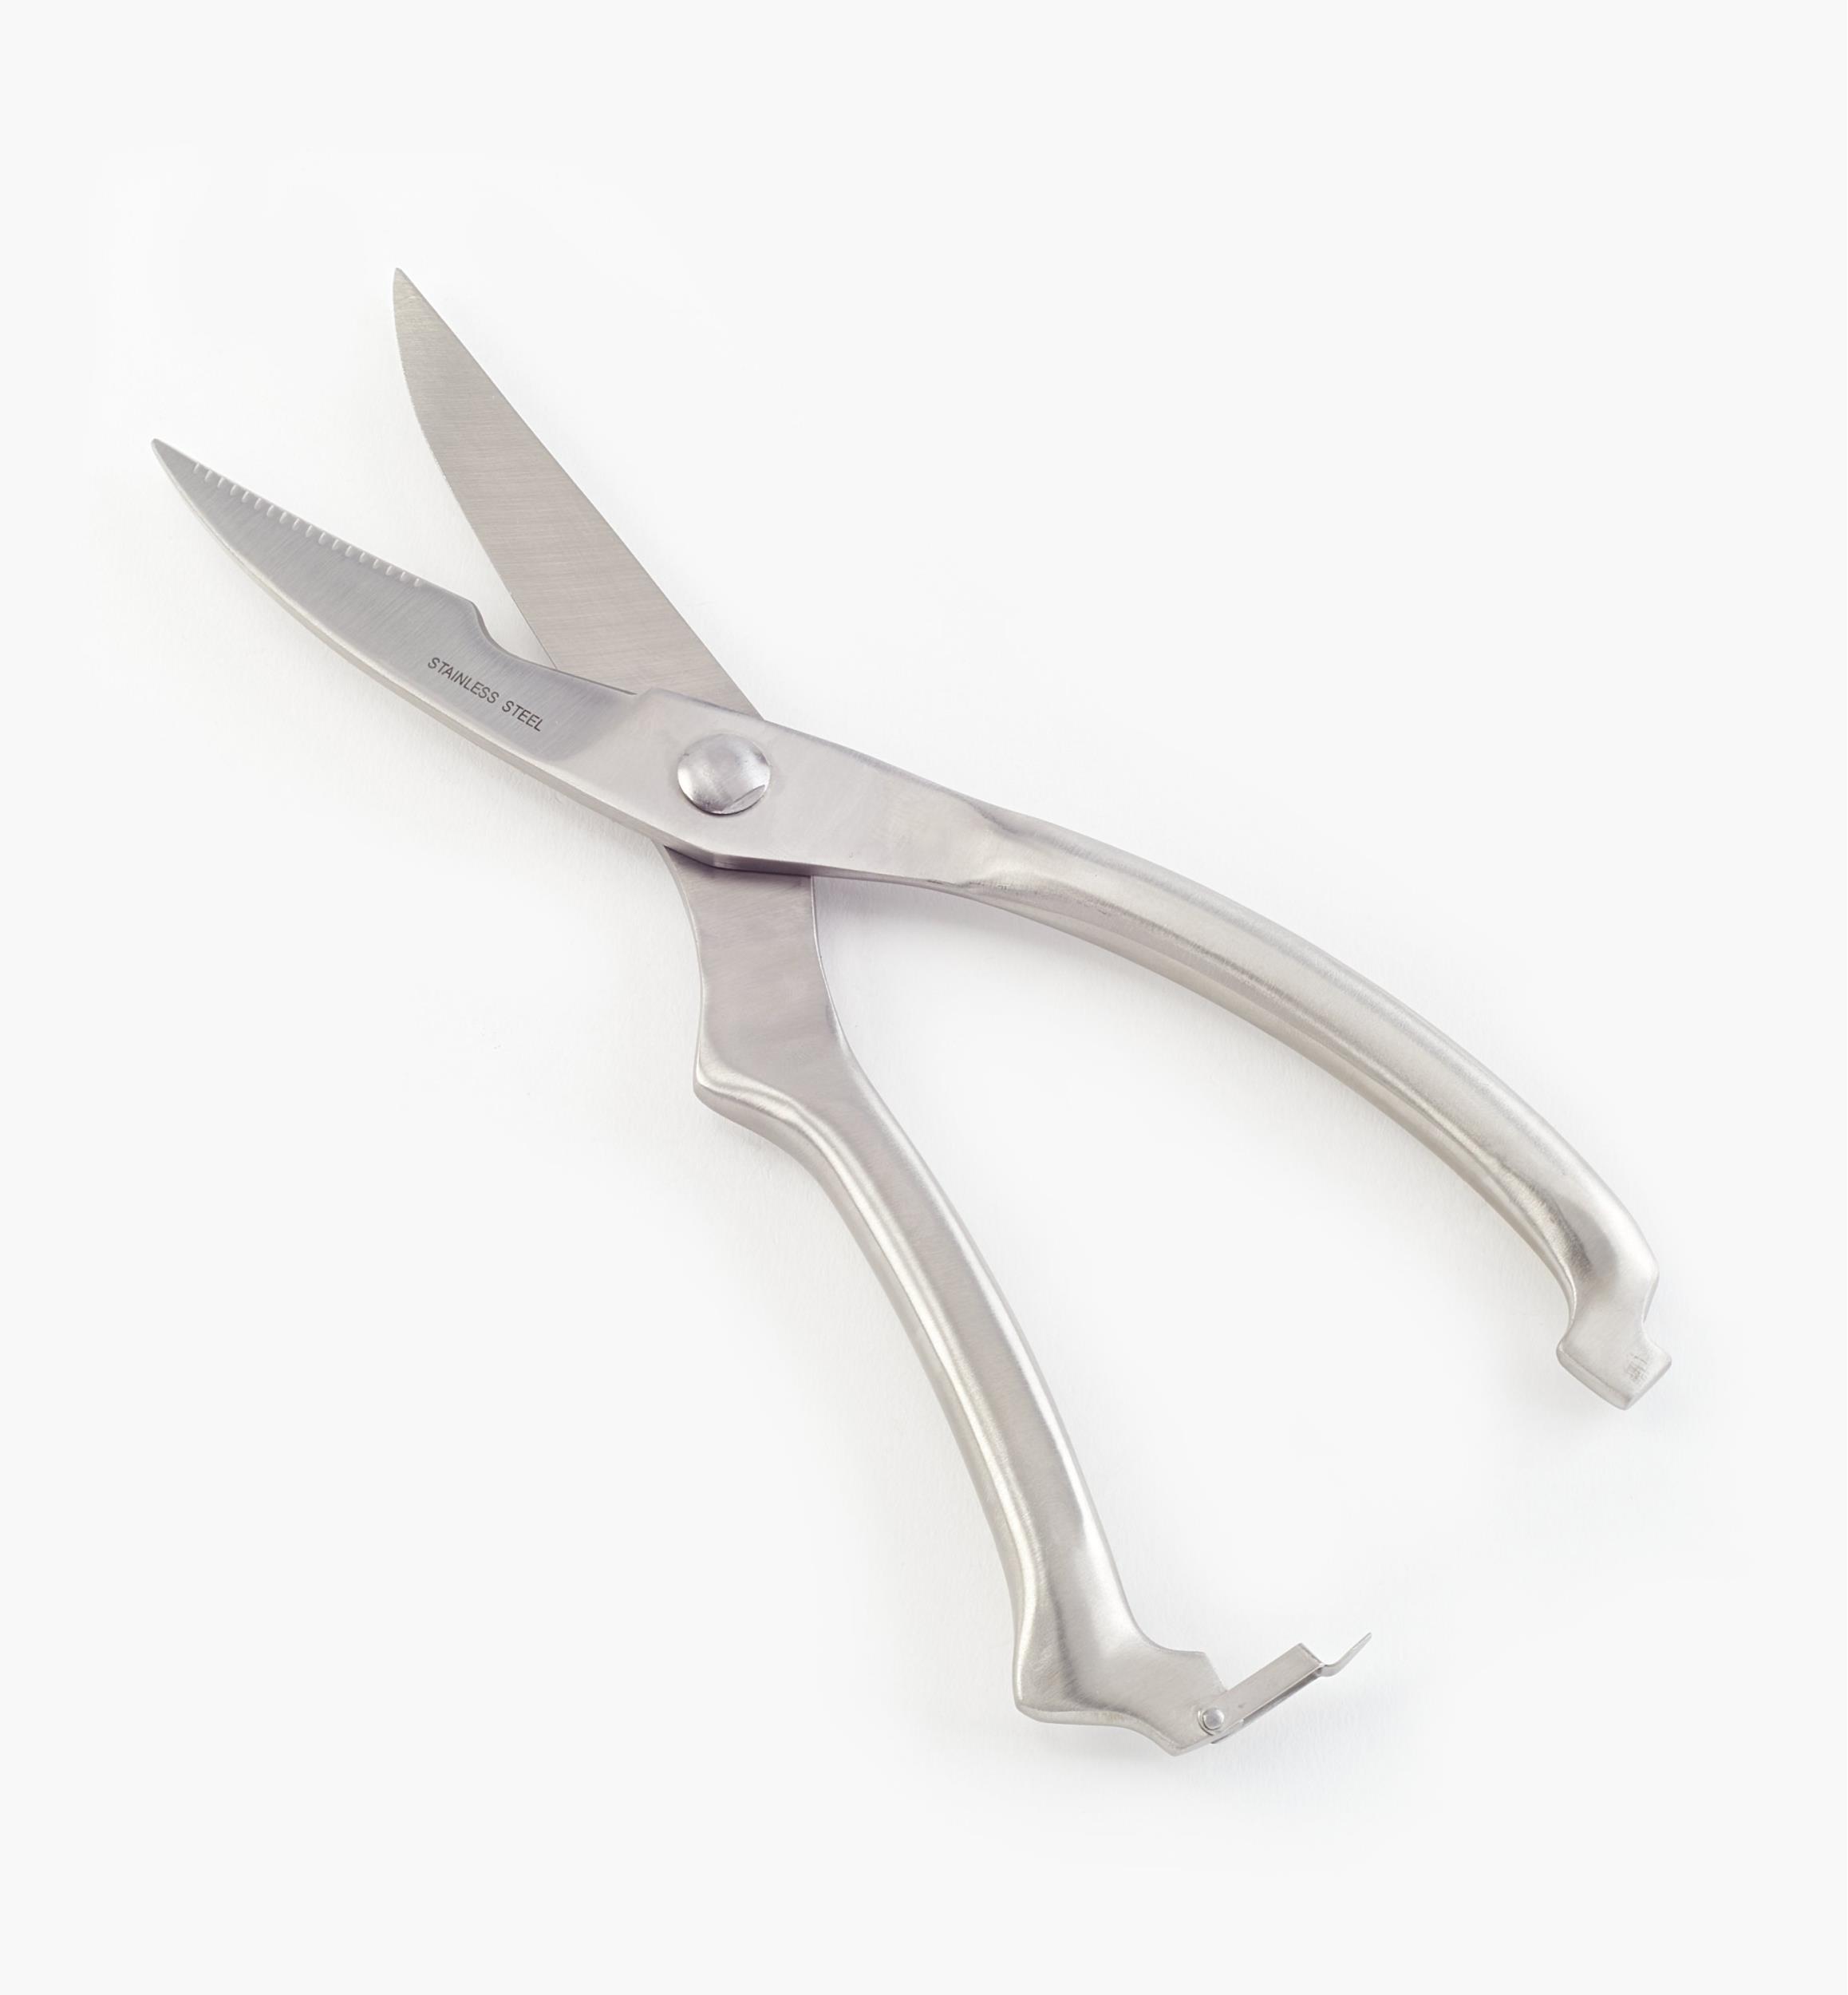 Multi-Purpose Safety Scissors - Lee Valley Tools